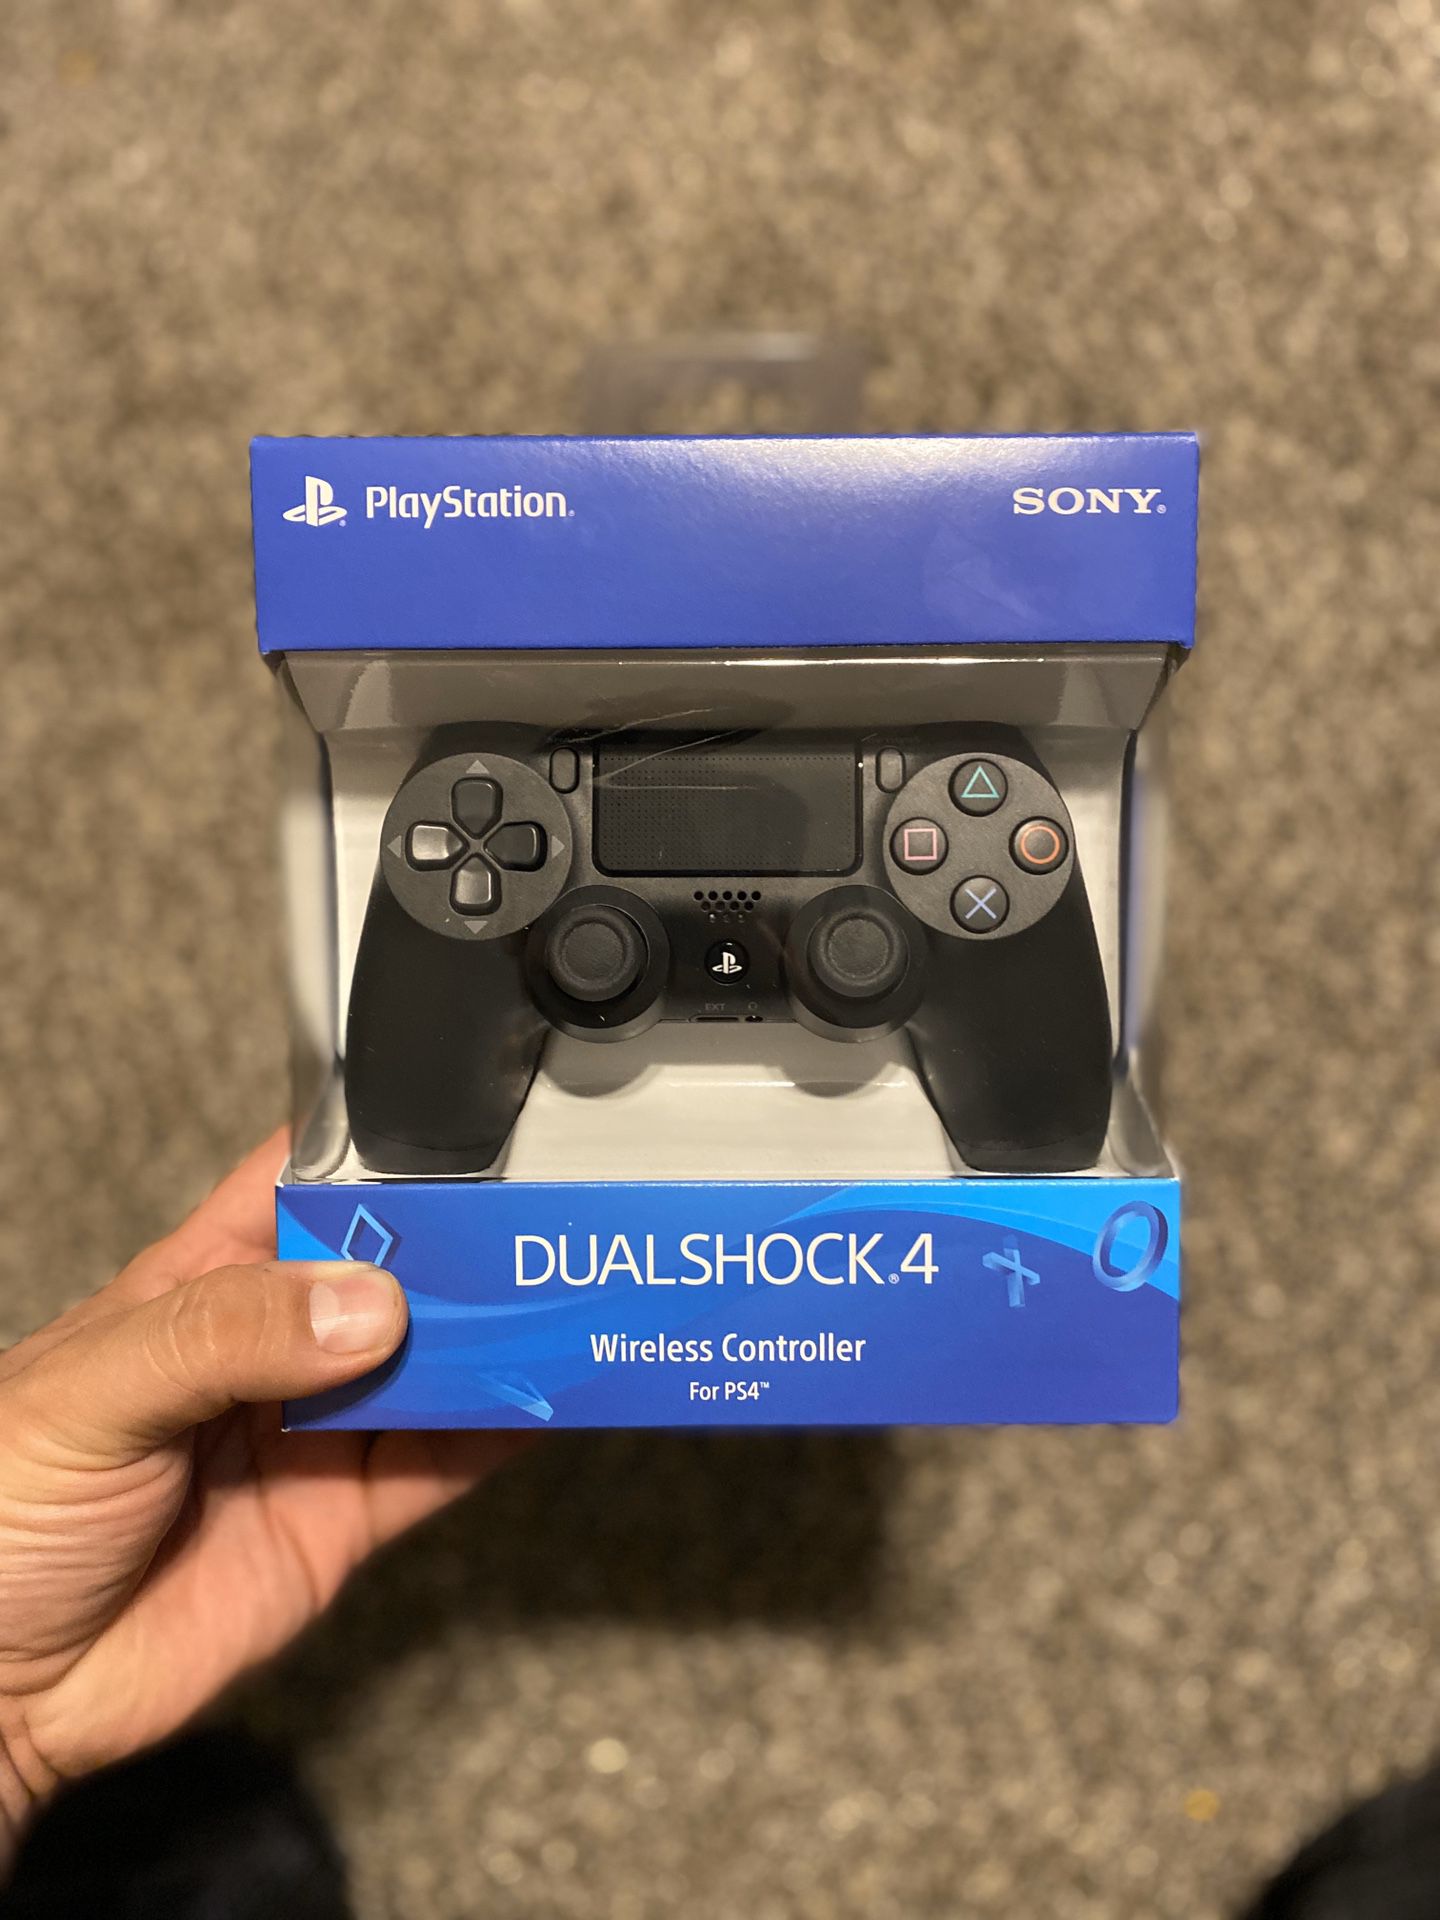 DualShock 4 PS4 Controller sealed